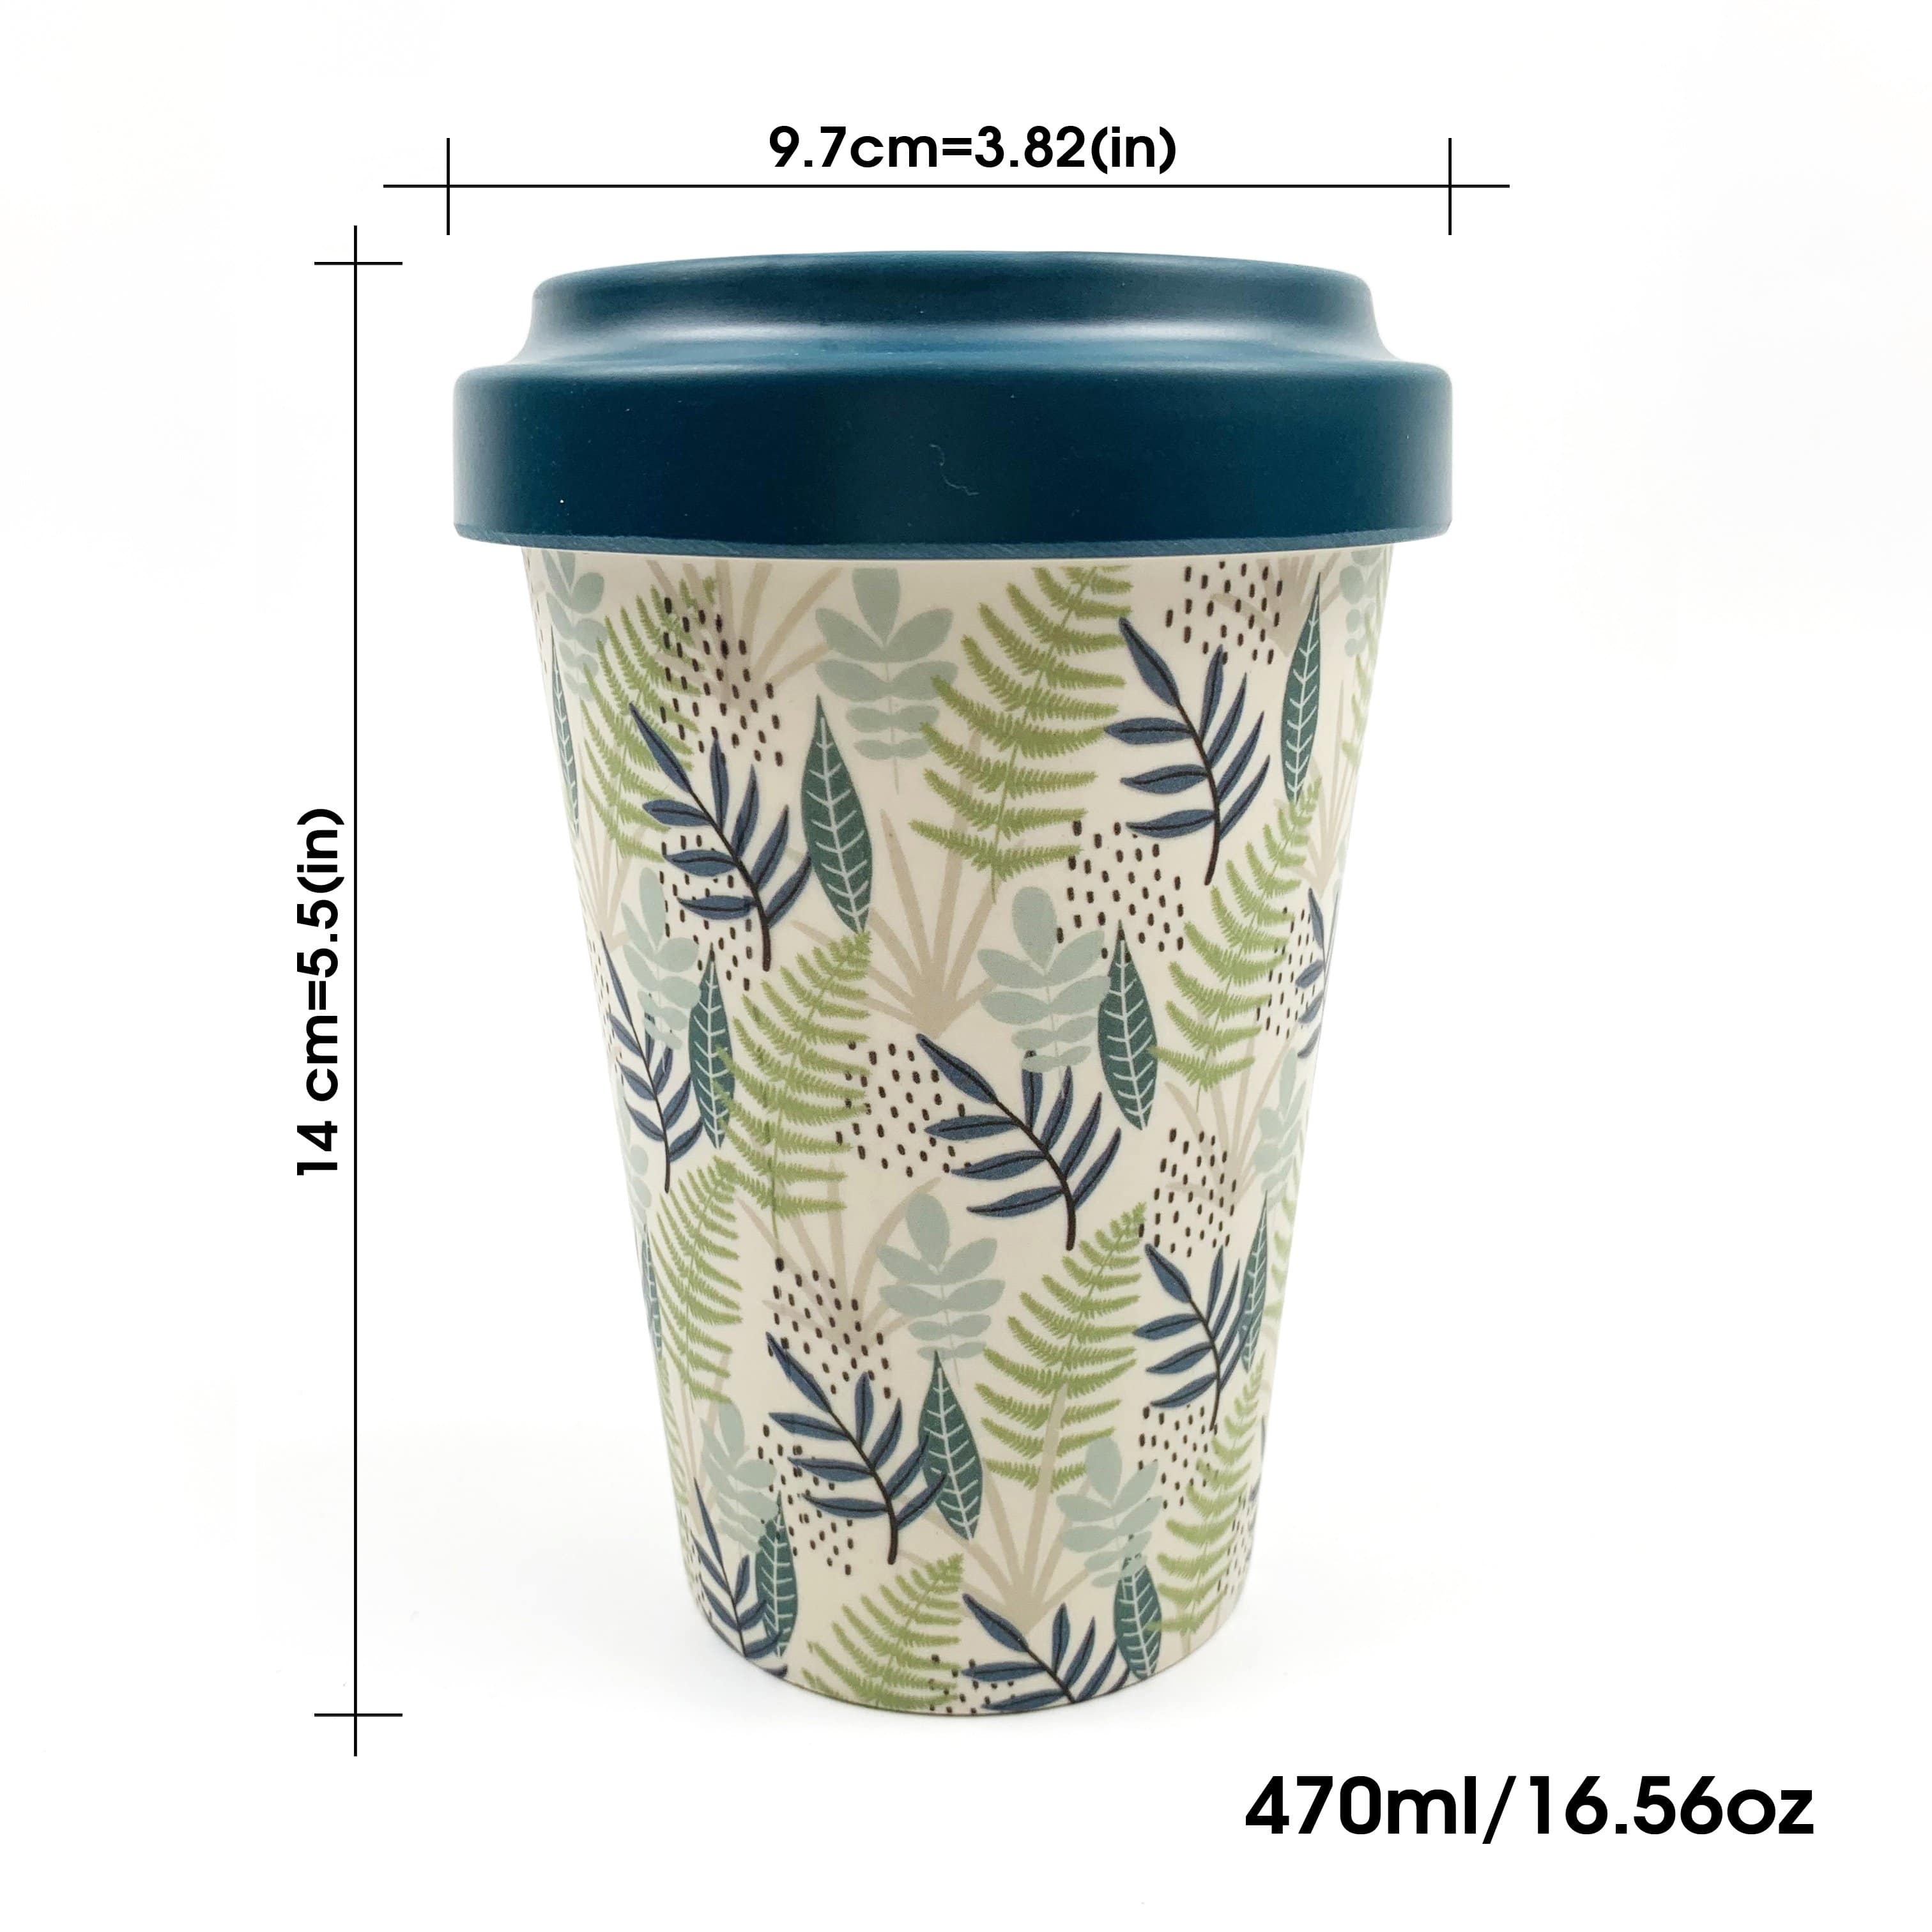 Coffee Cup & Mug To My Wife - I Love You Ecoffee Cup GiveMe-Gifts